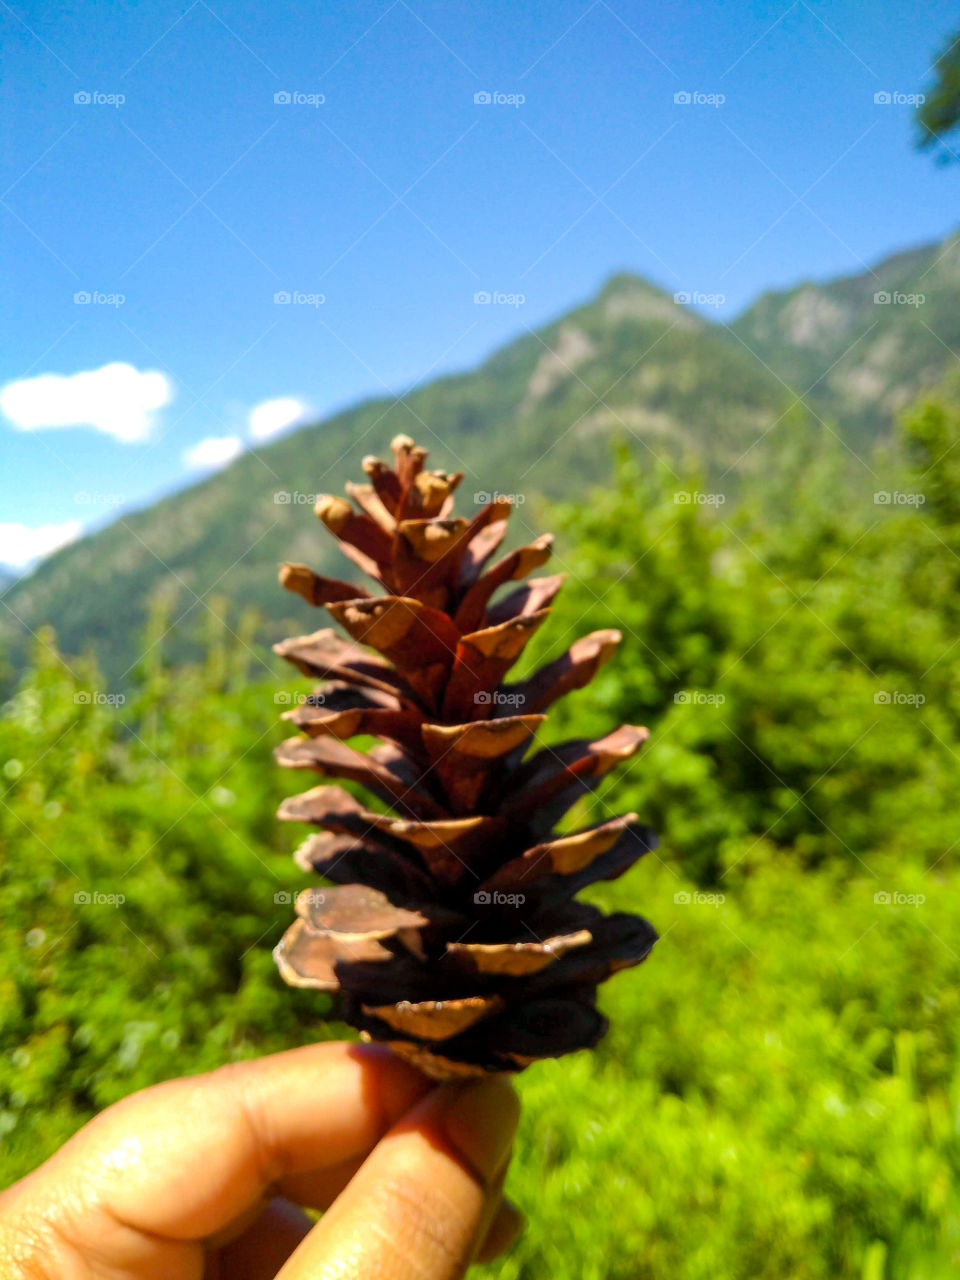 The great Himalayan Pine